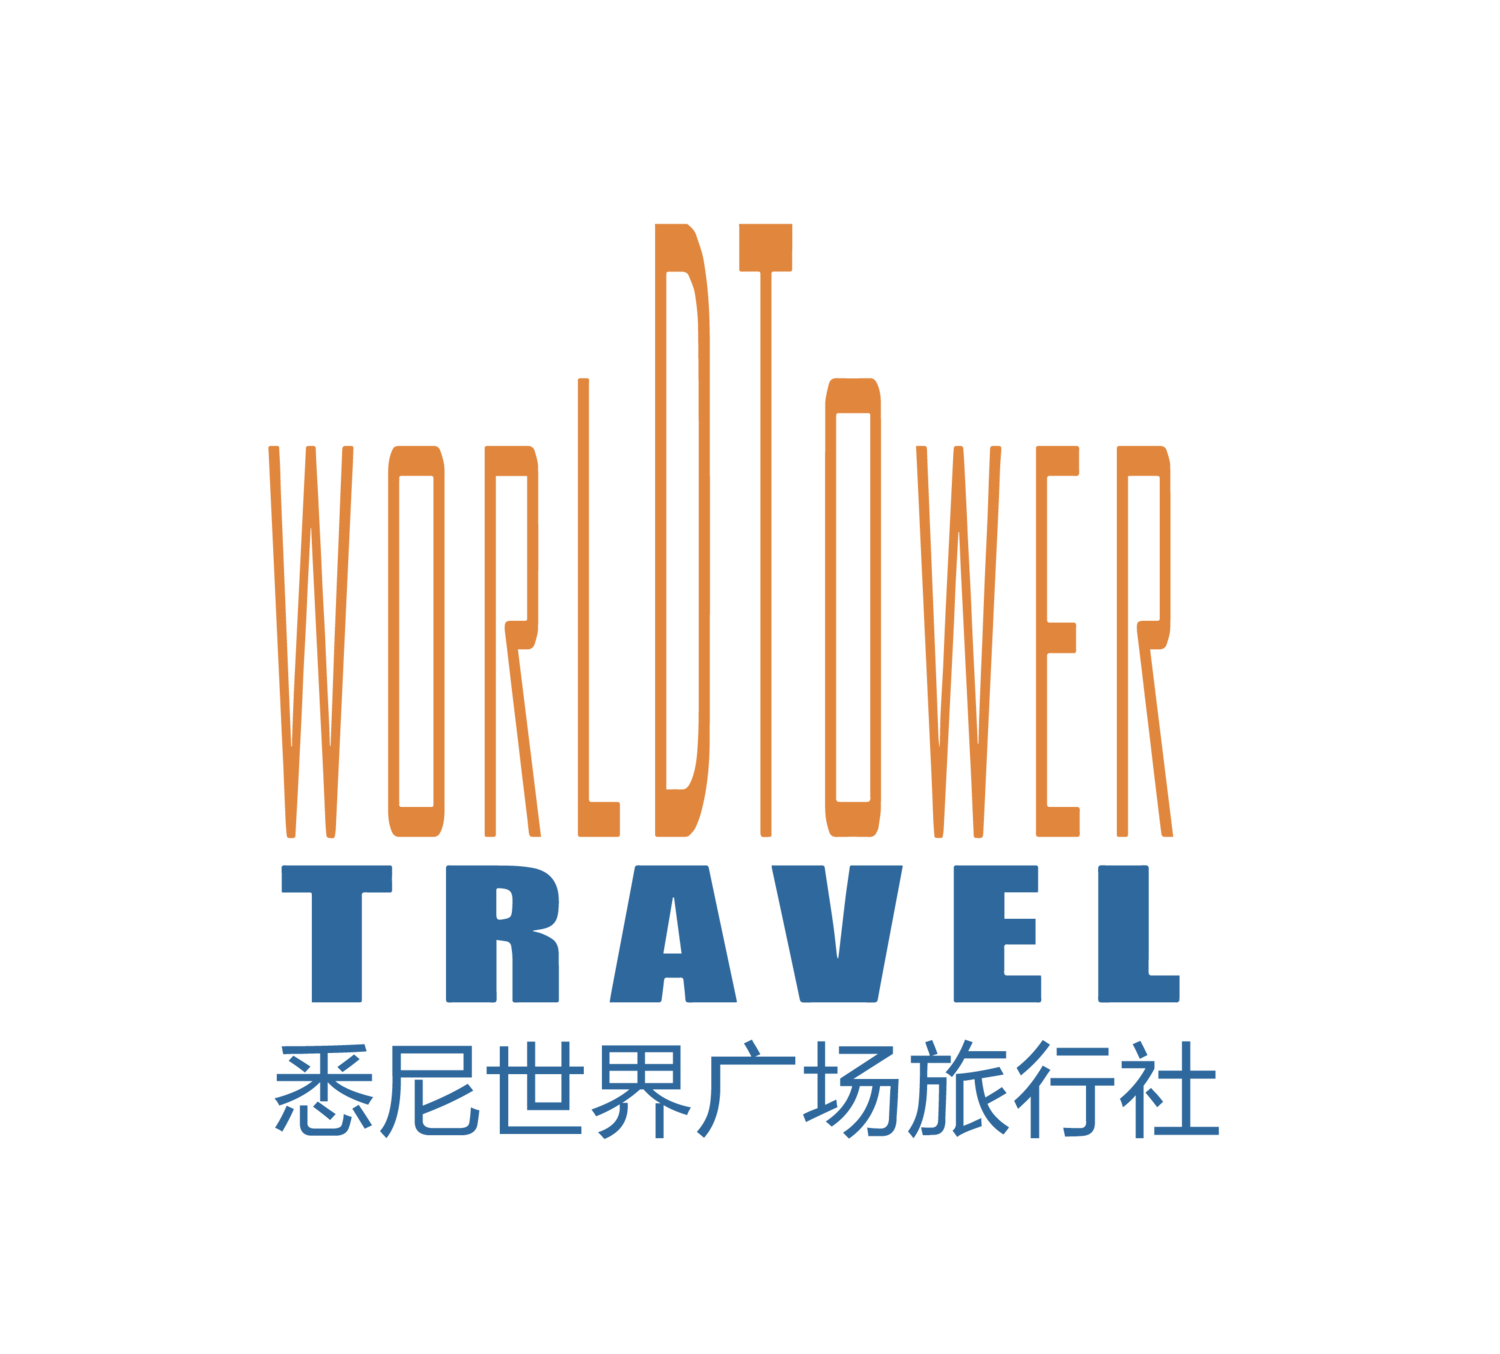 World Tower Travel